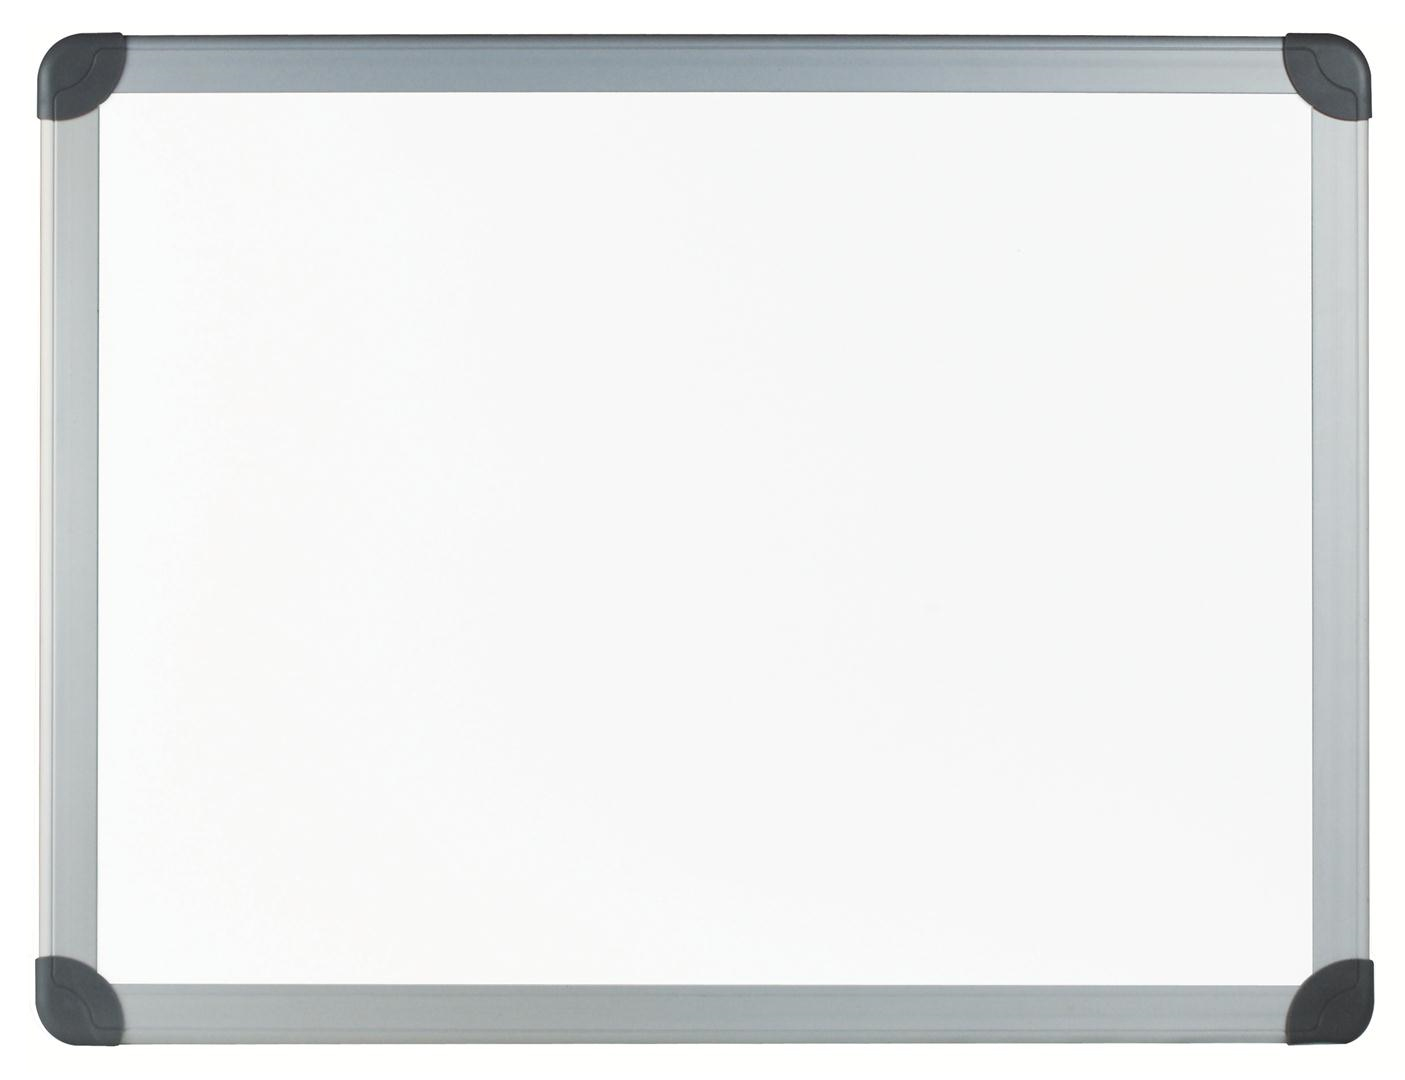 Mini whiteboard clipart